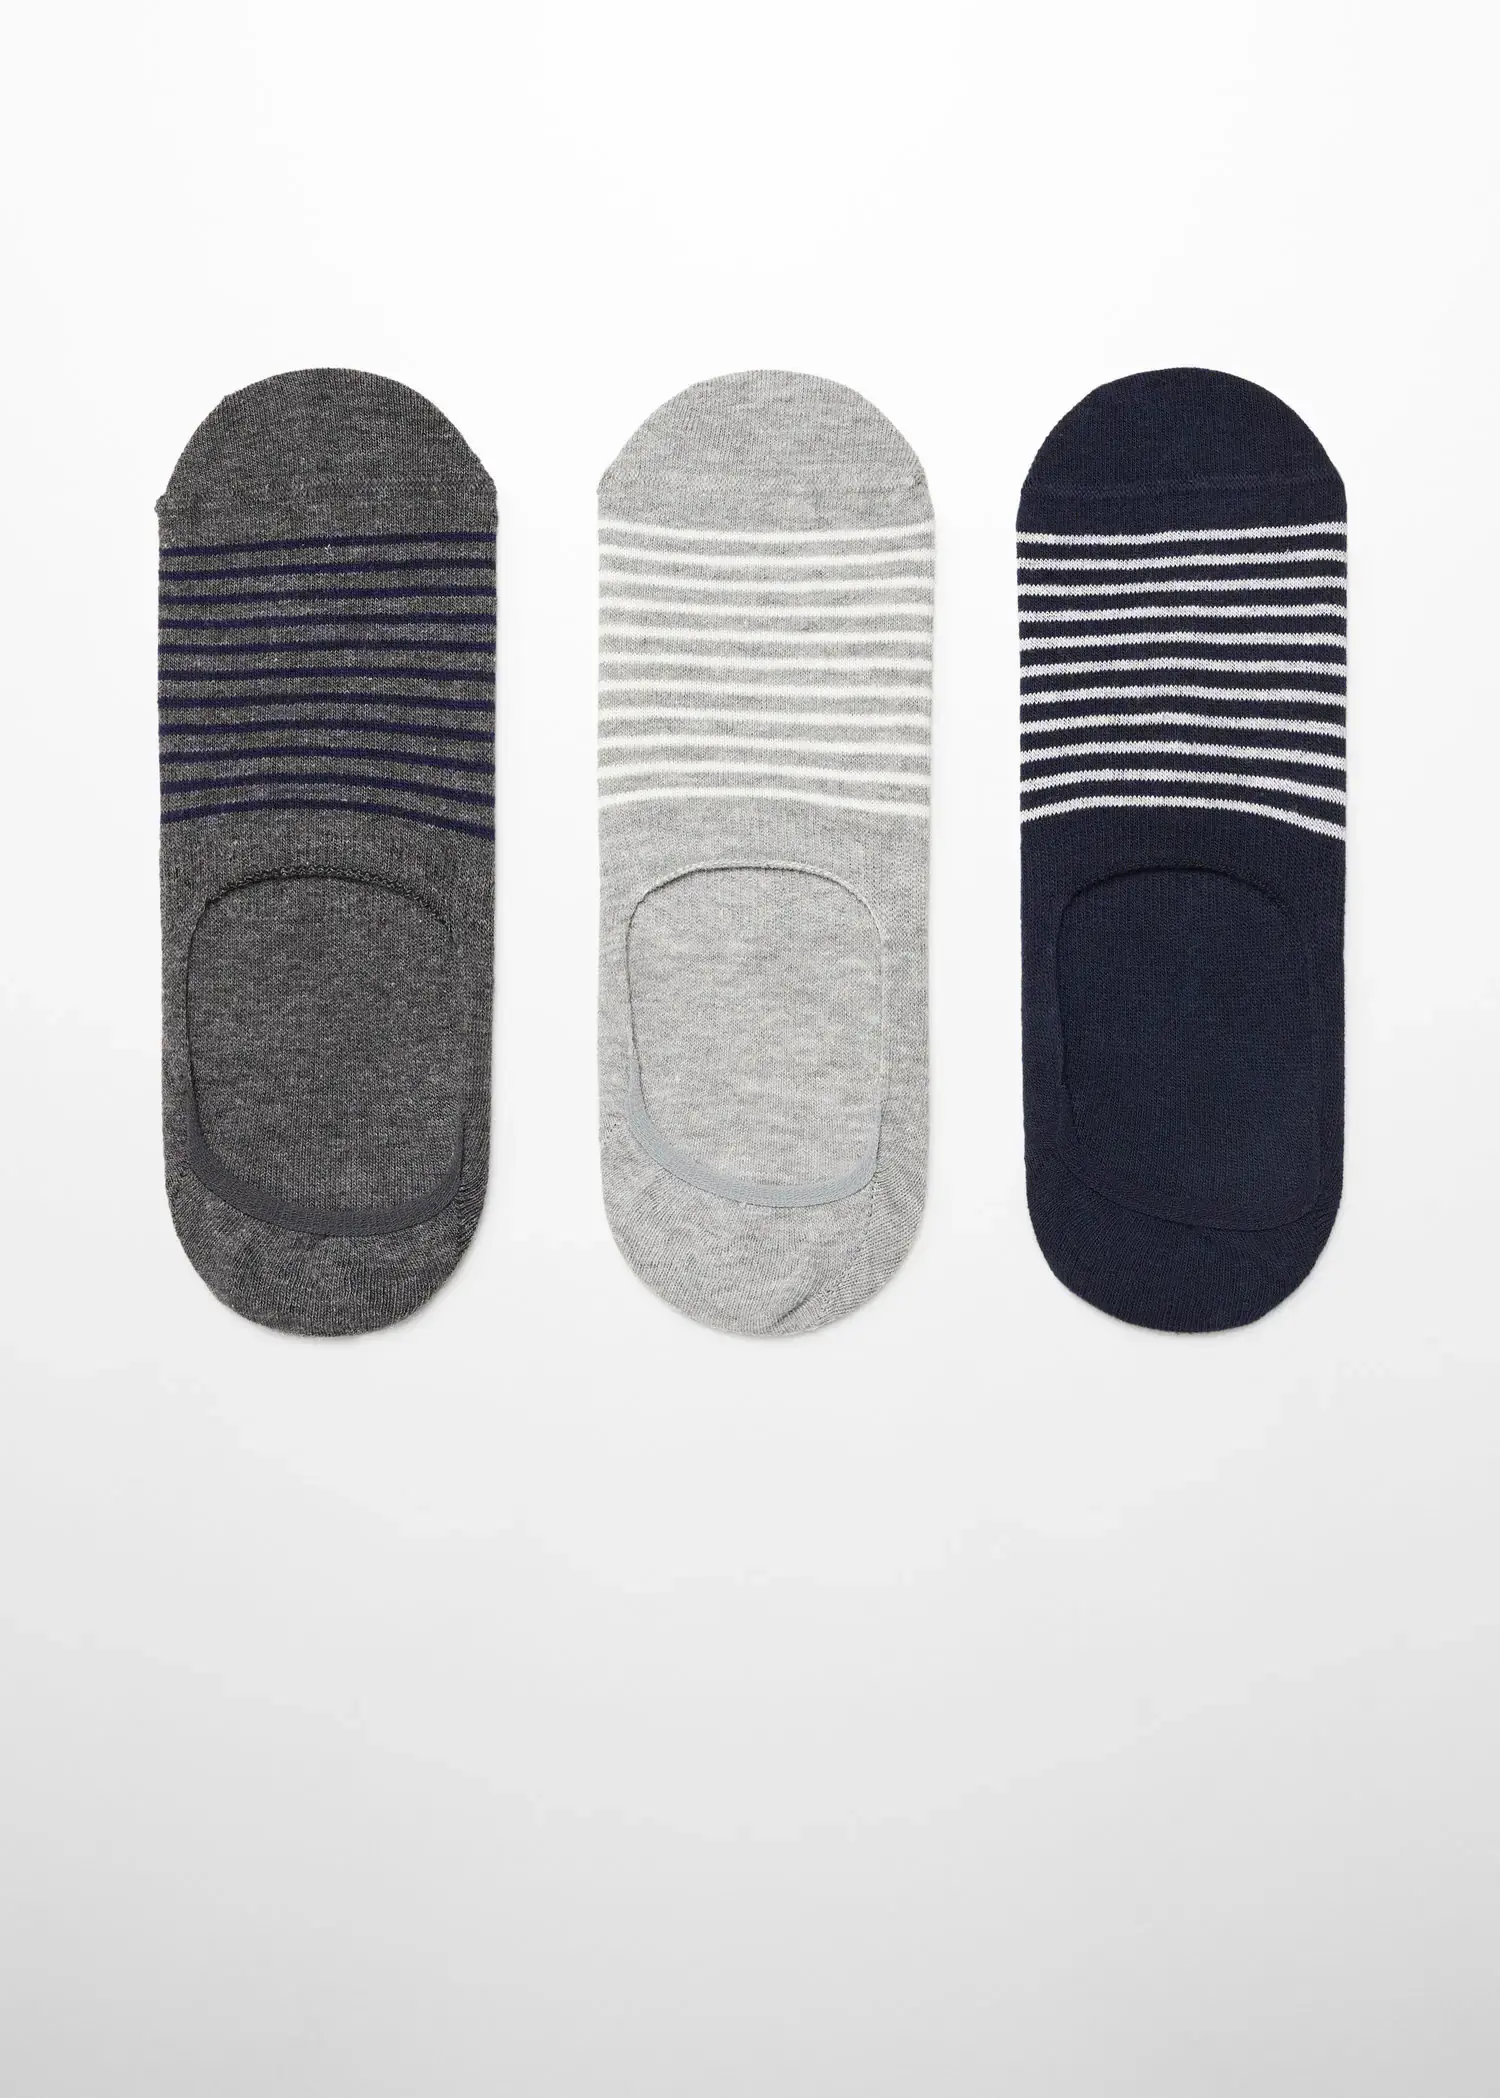 Mango 3-pack of striped design socks. 1